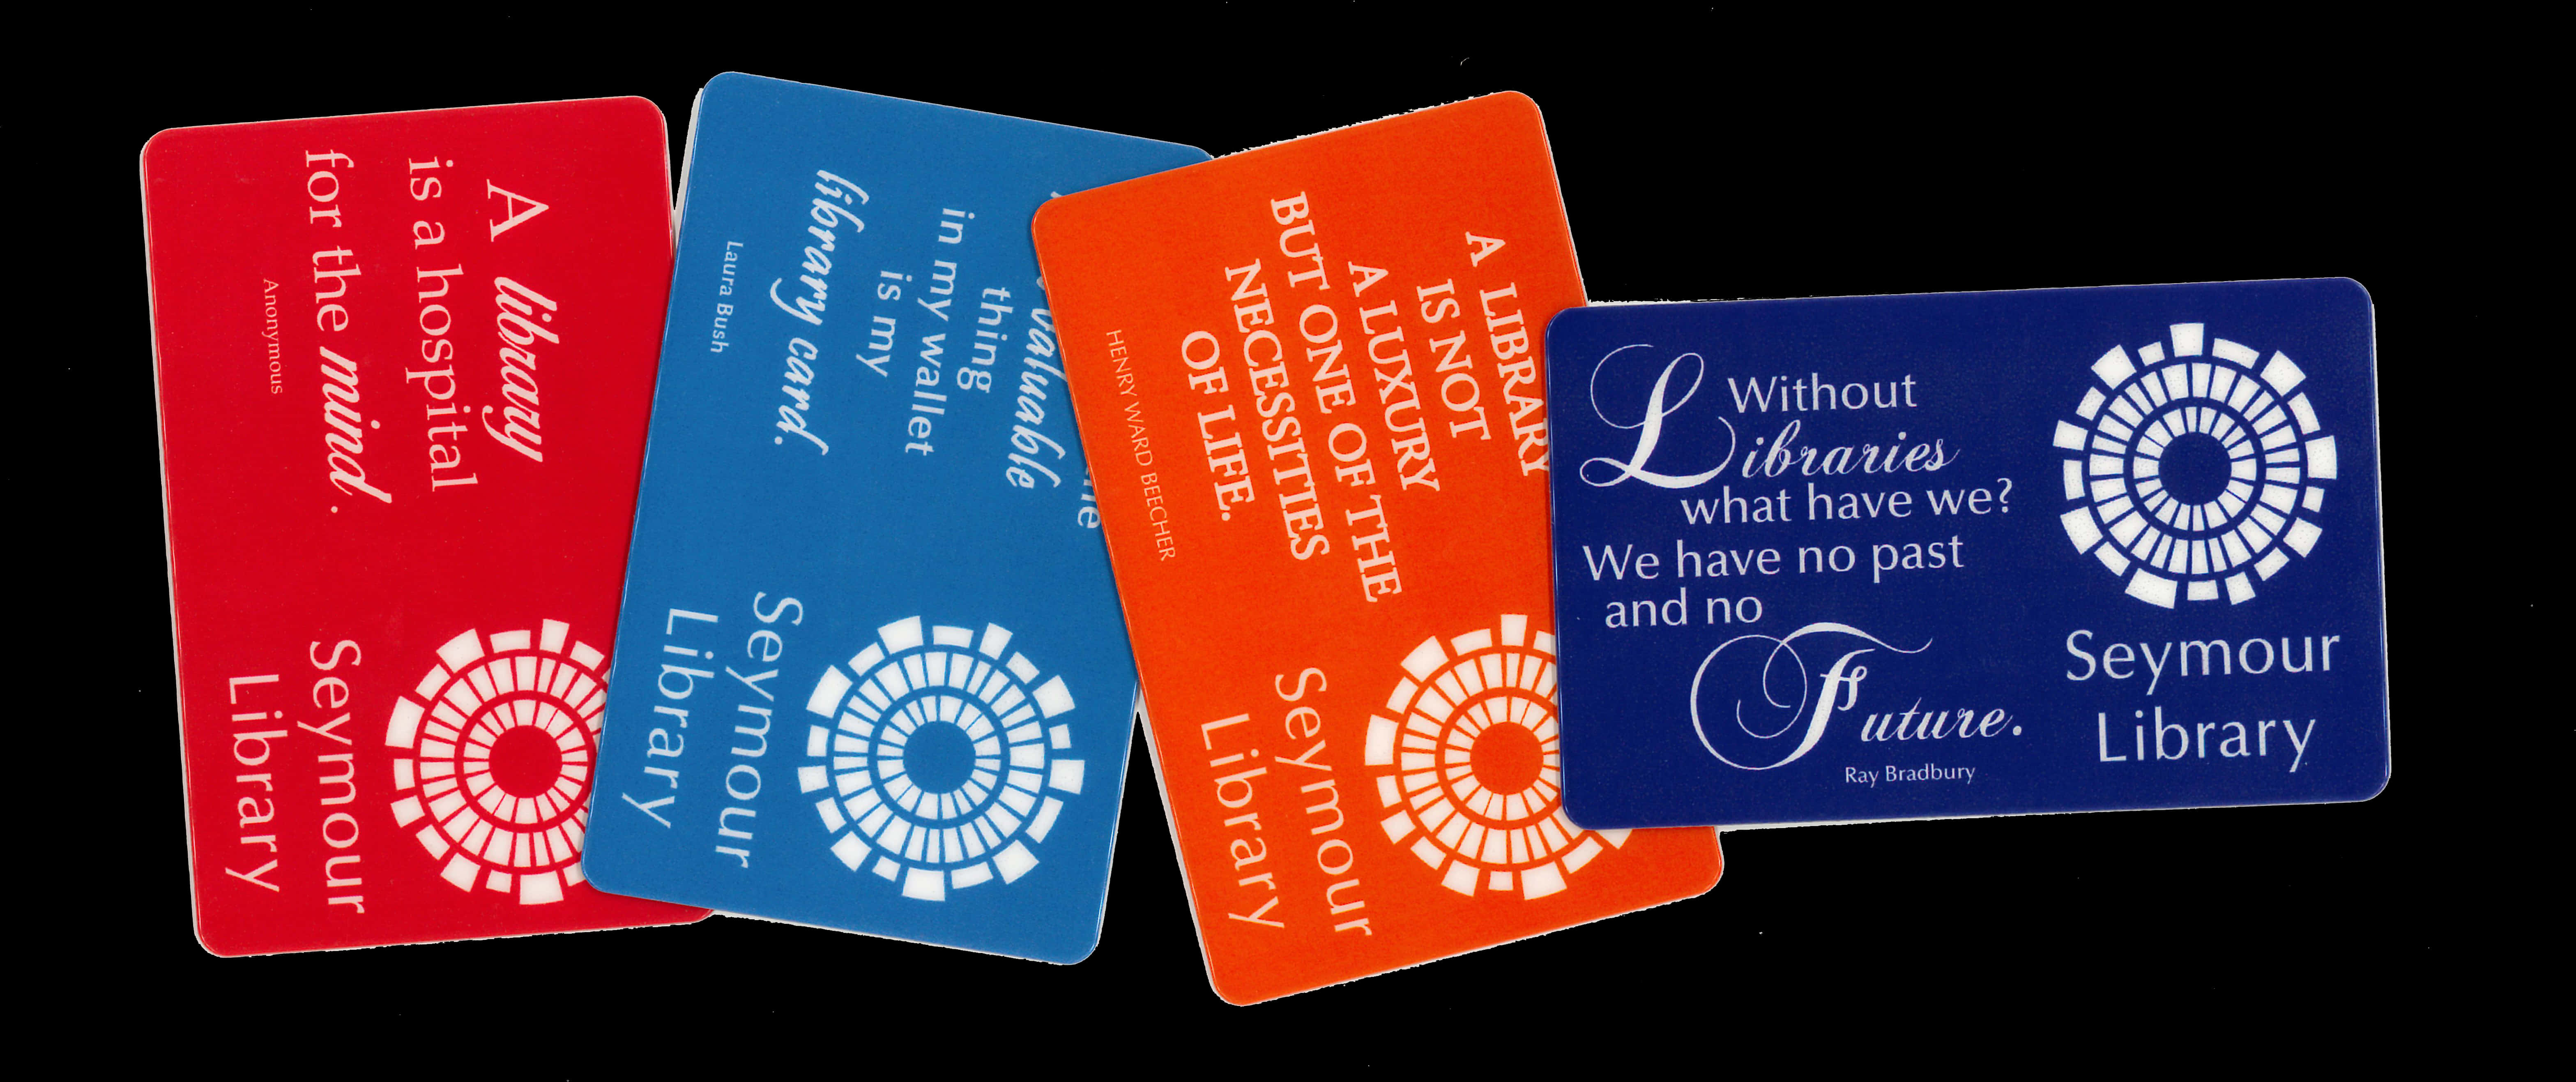 Seymour Library Card Designs